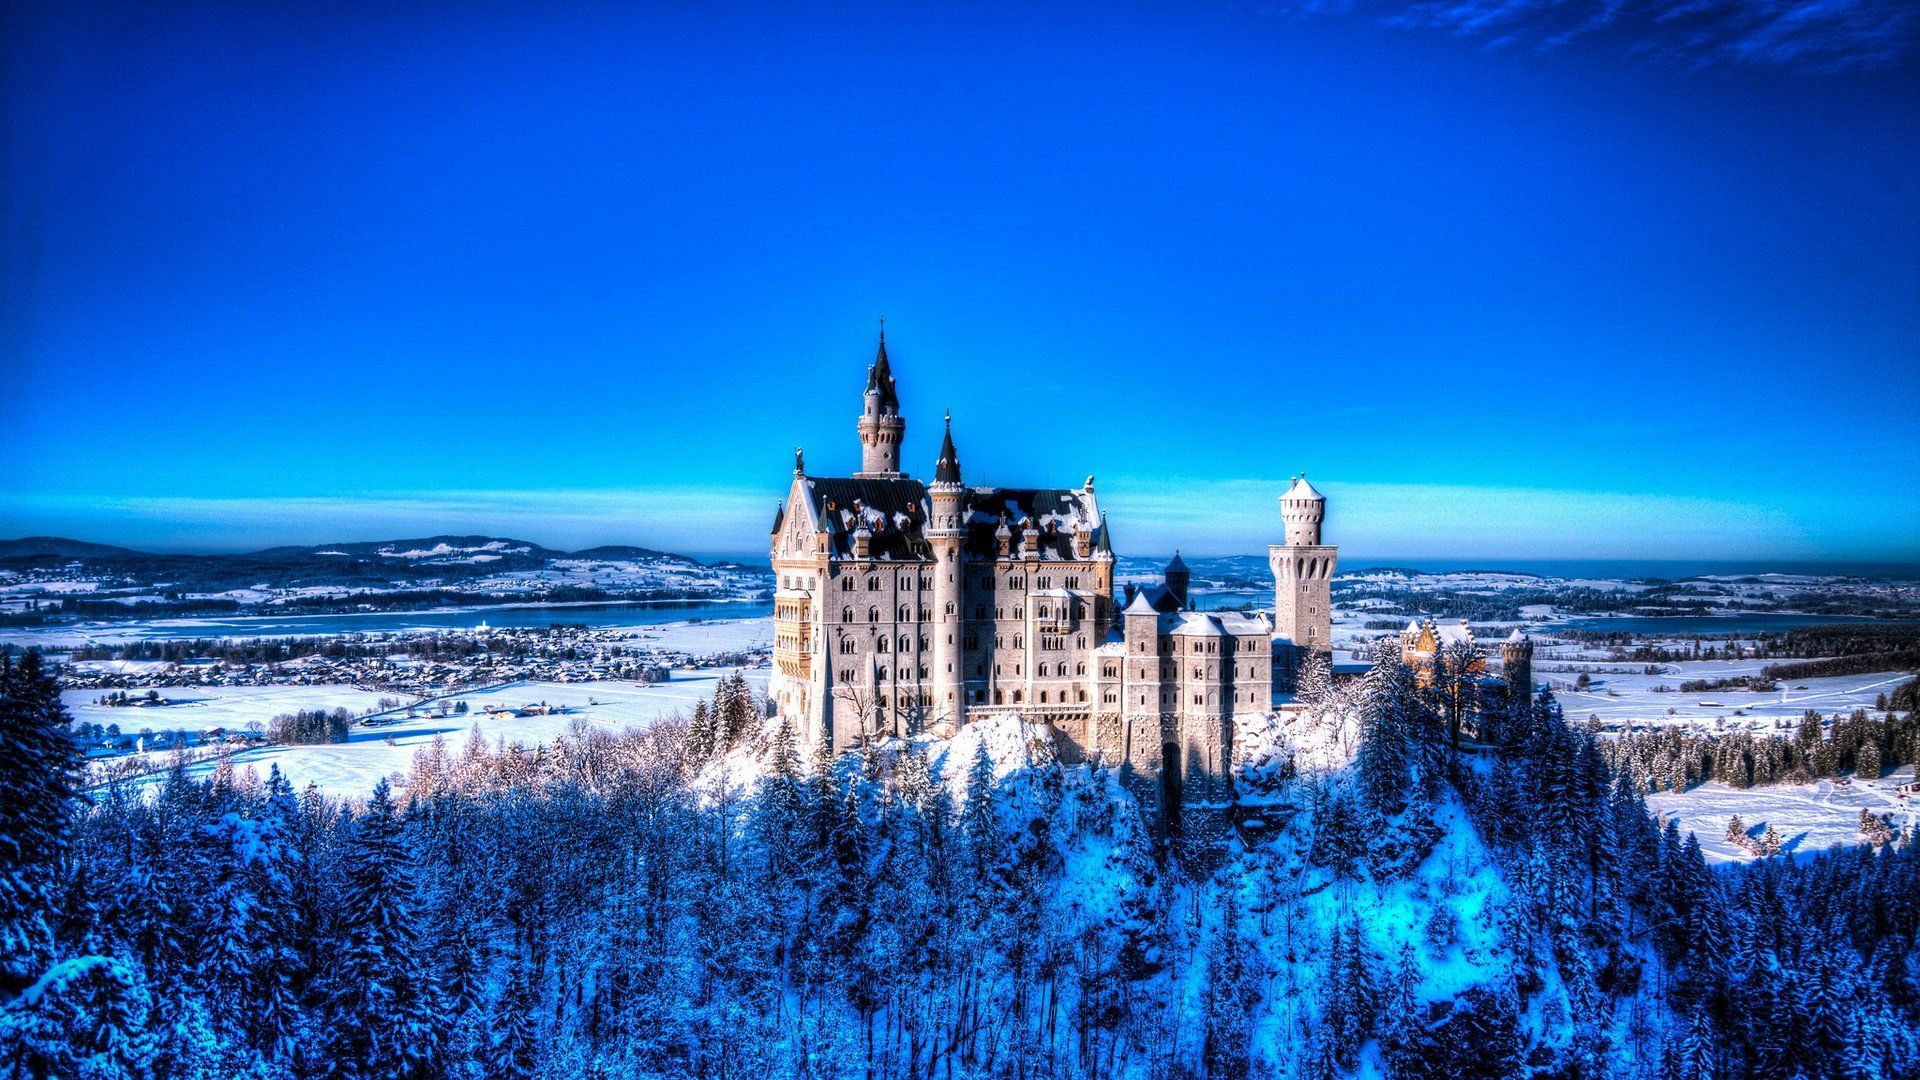 Download desktop wallpaper Neuschwanstein Castle Bavaria Germany Winter 1920x1080